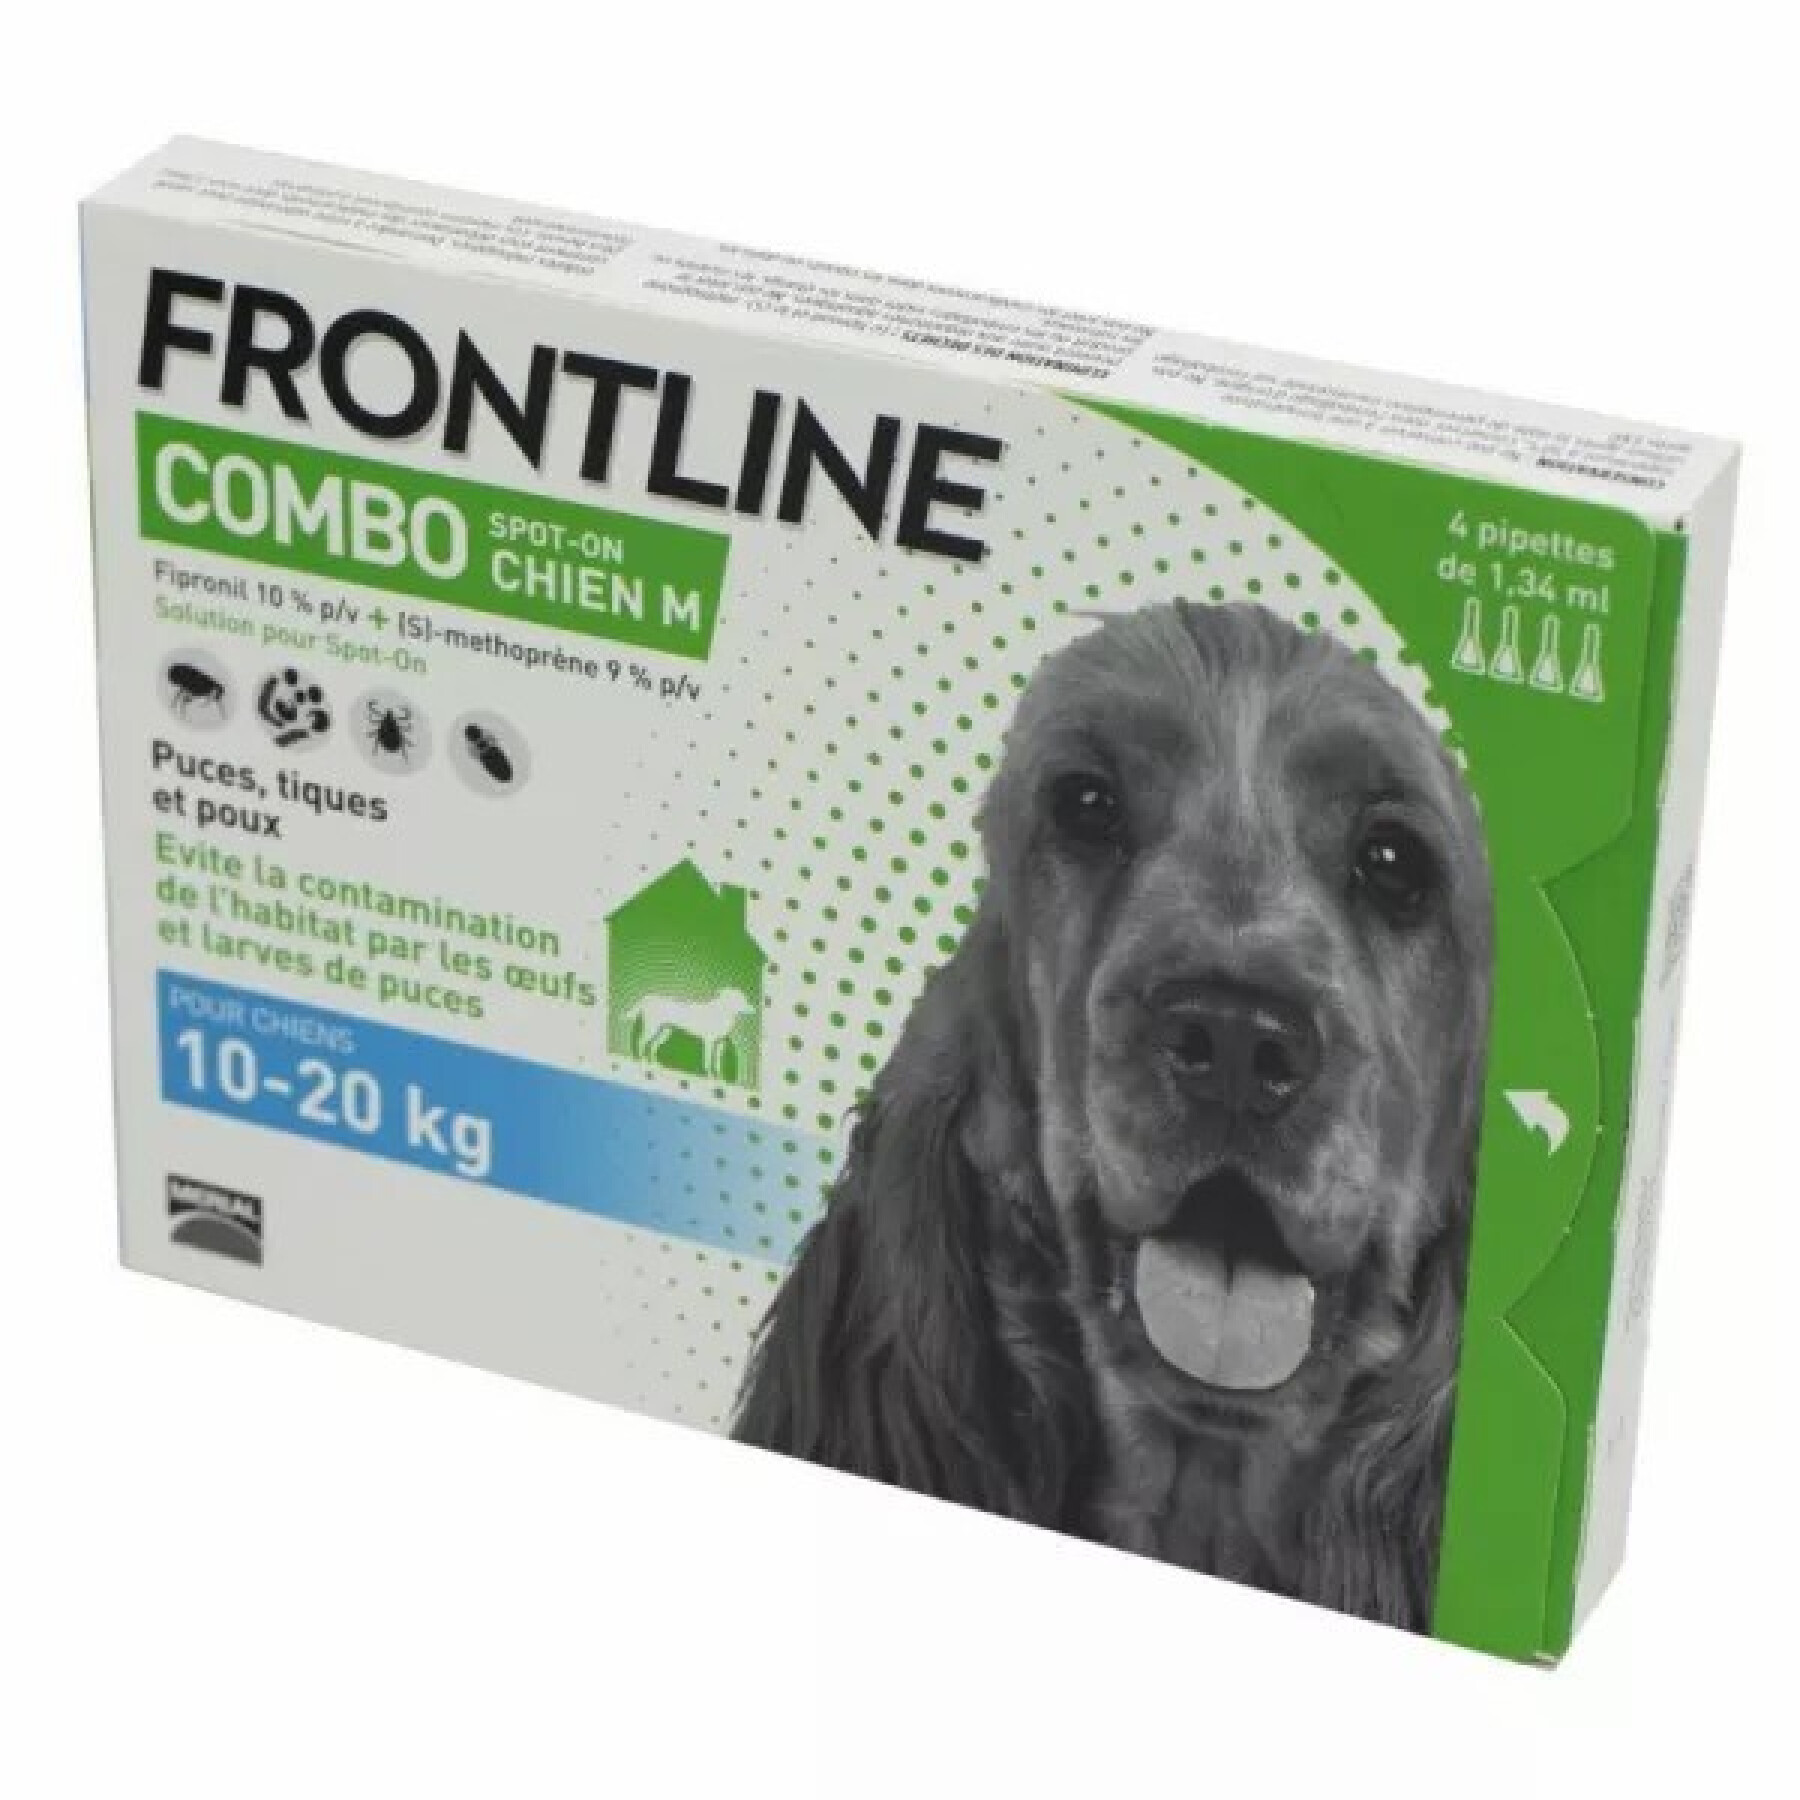 Pest control for dogs Frontline de 10/20 kg Combo Spot On (x4)